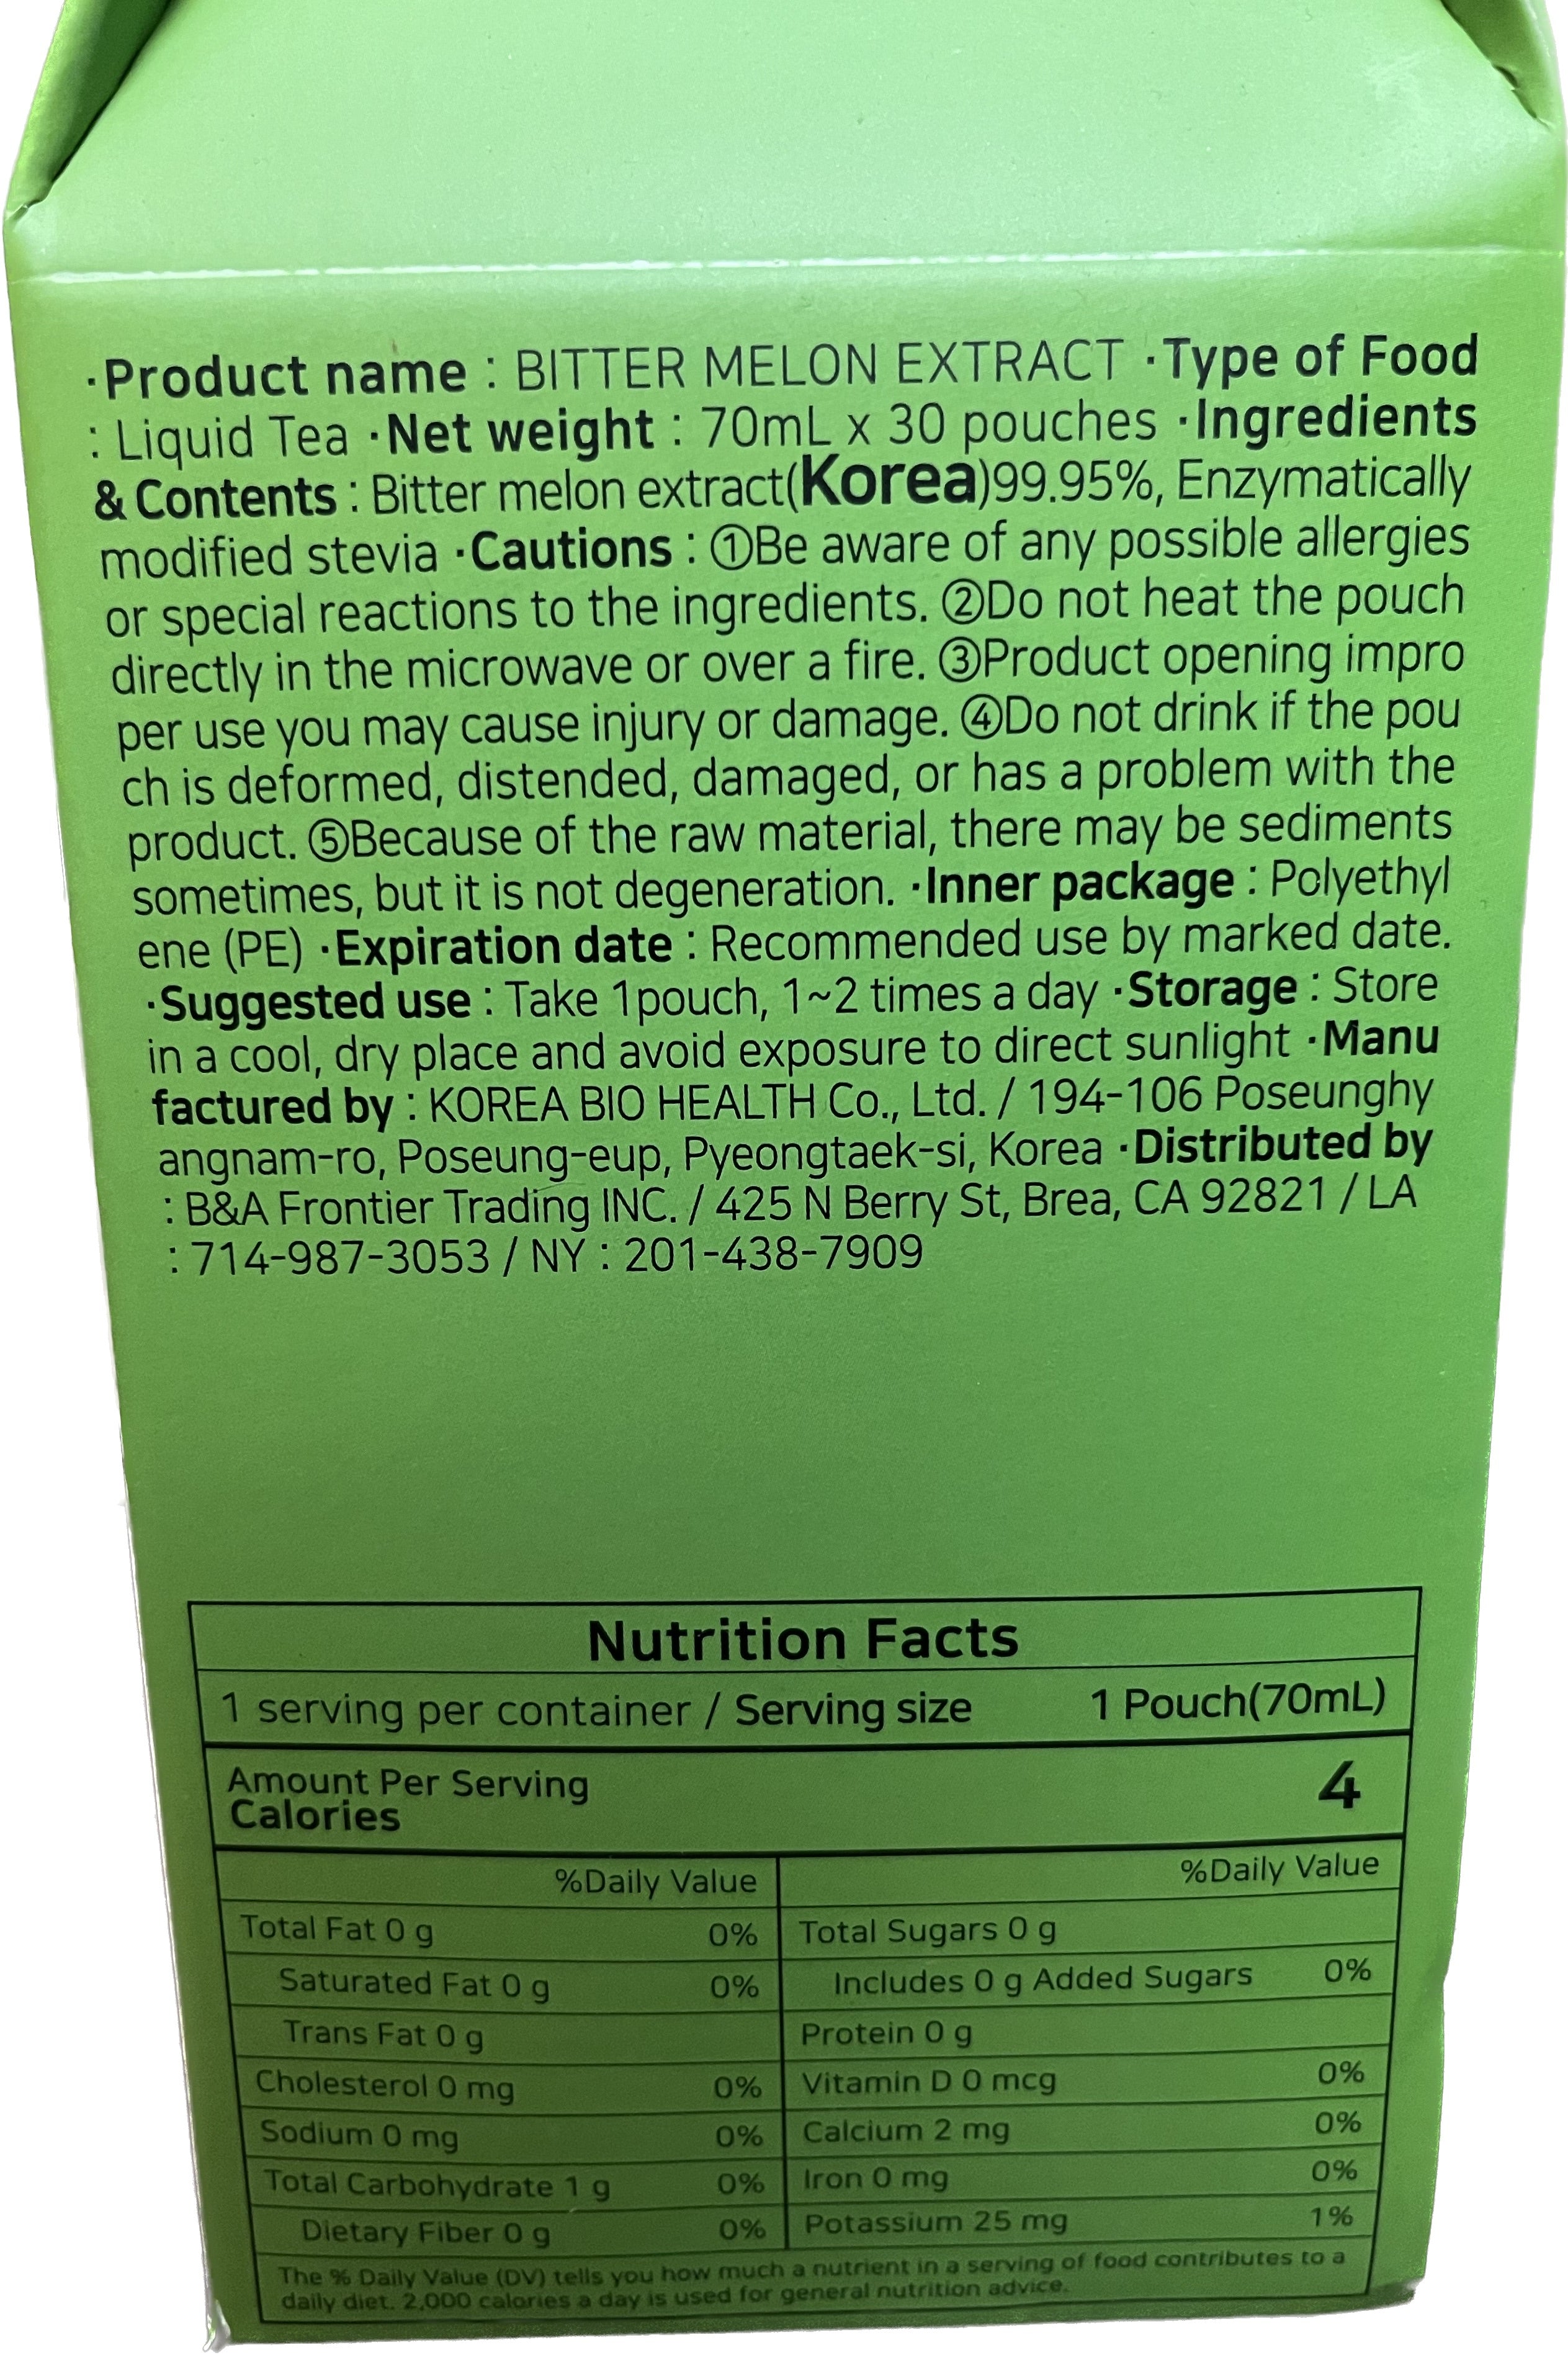 Pine Tree Brand- Bitter Melon Extract 70mL x 30